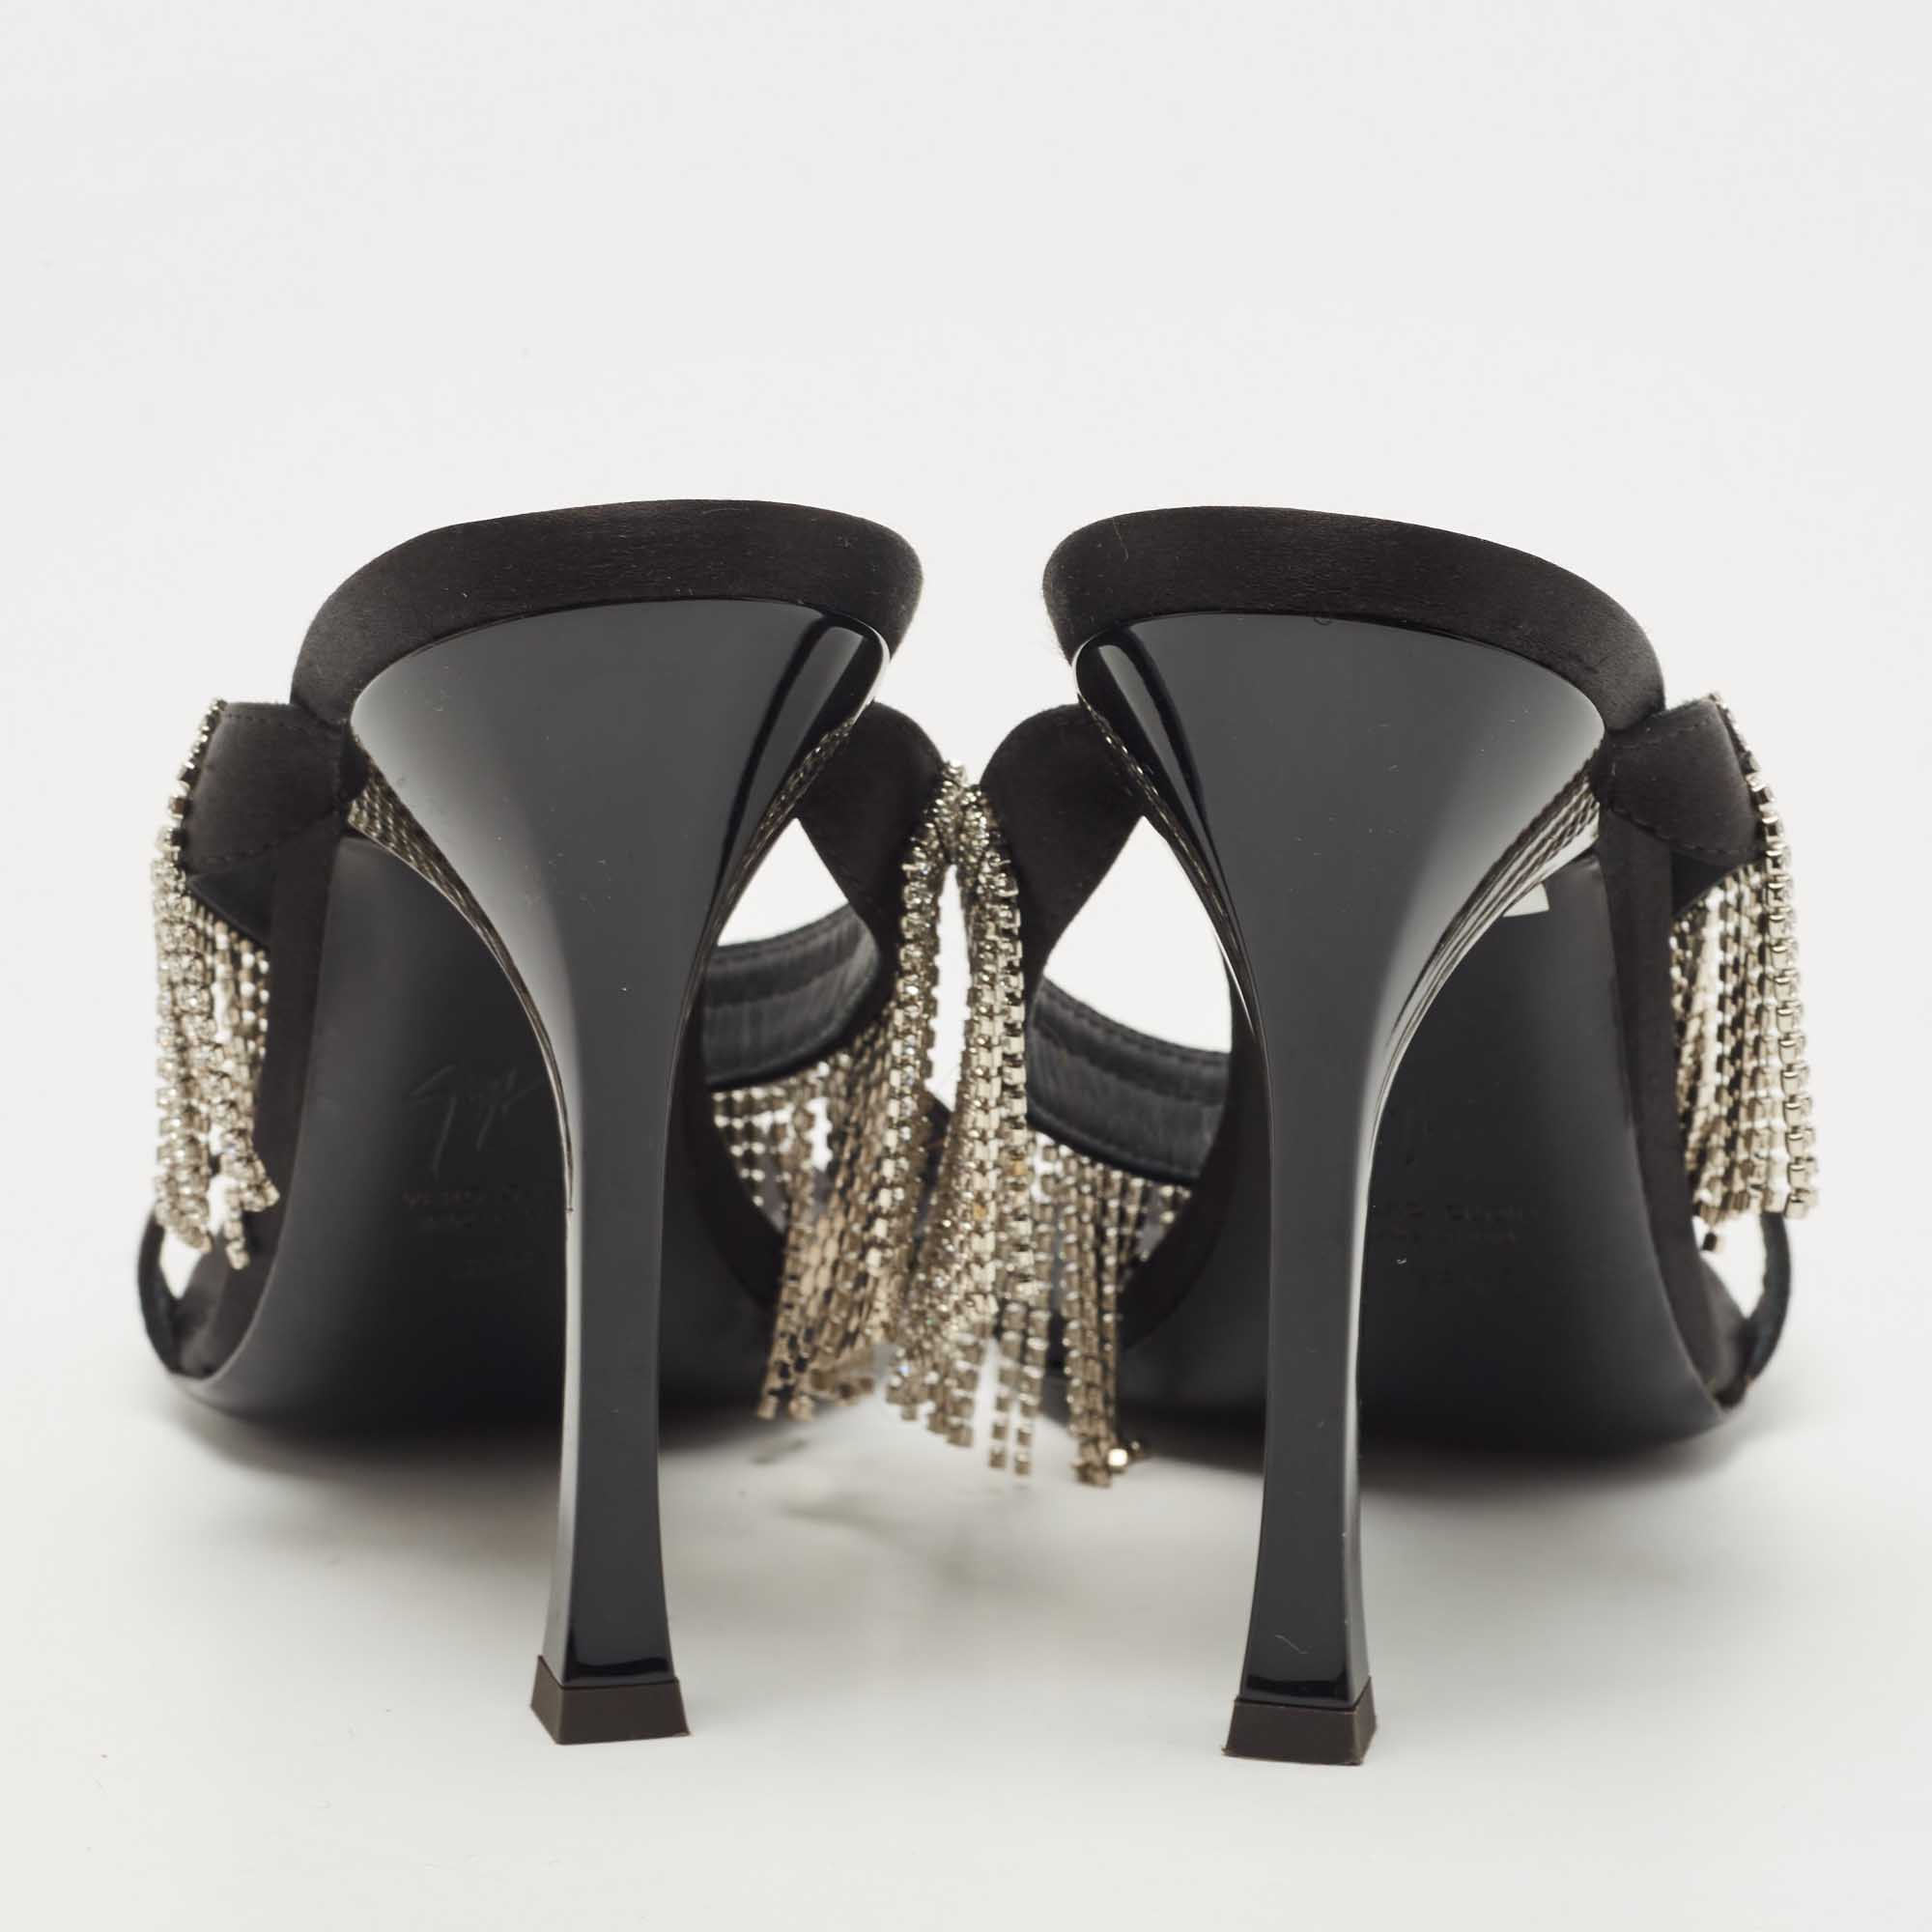 Giuseppe Zanotti Black Satin Crystal Fringe Slide Sandals Size 38.5